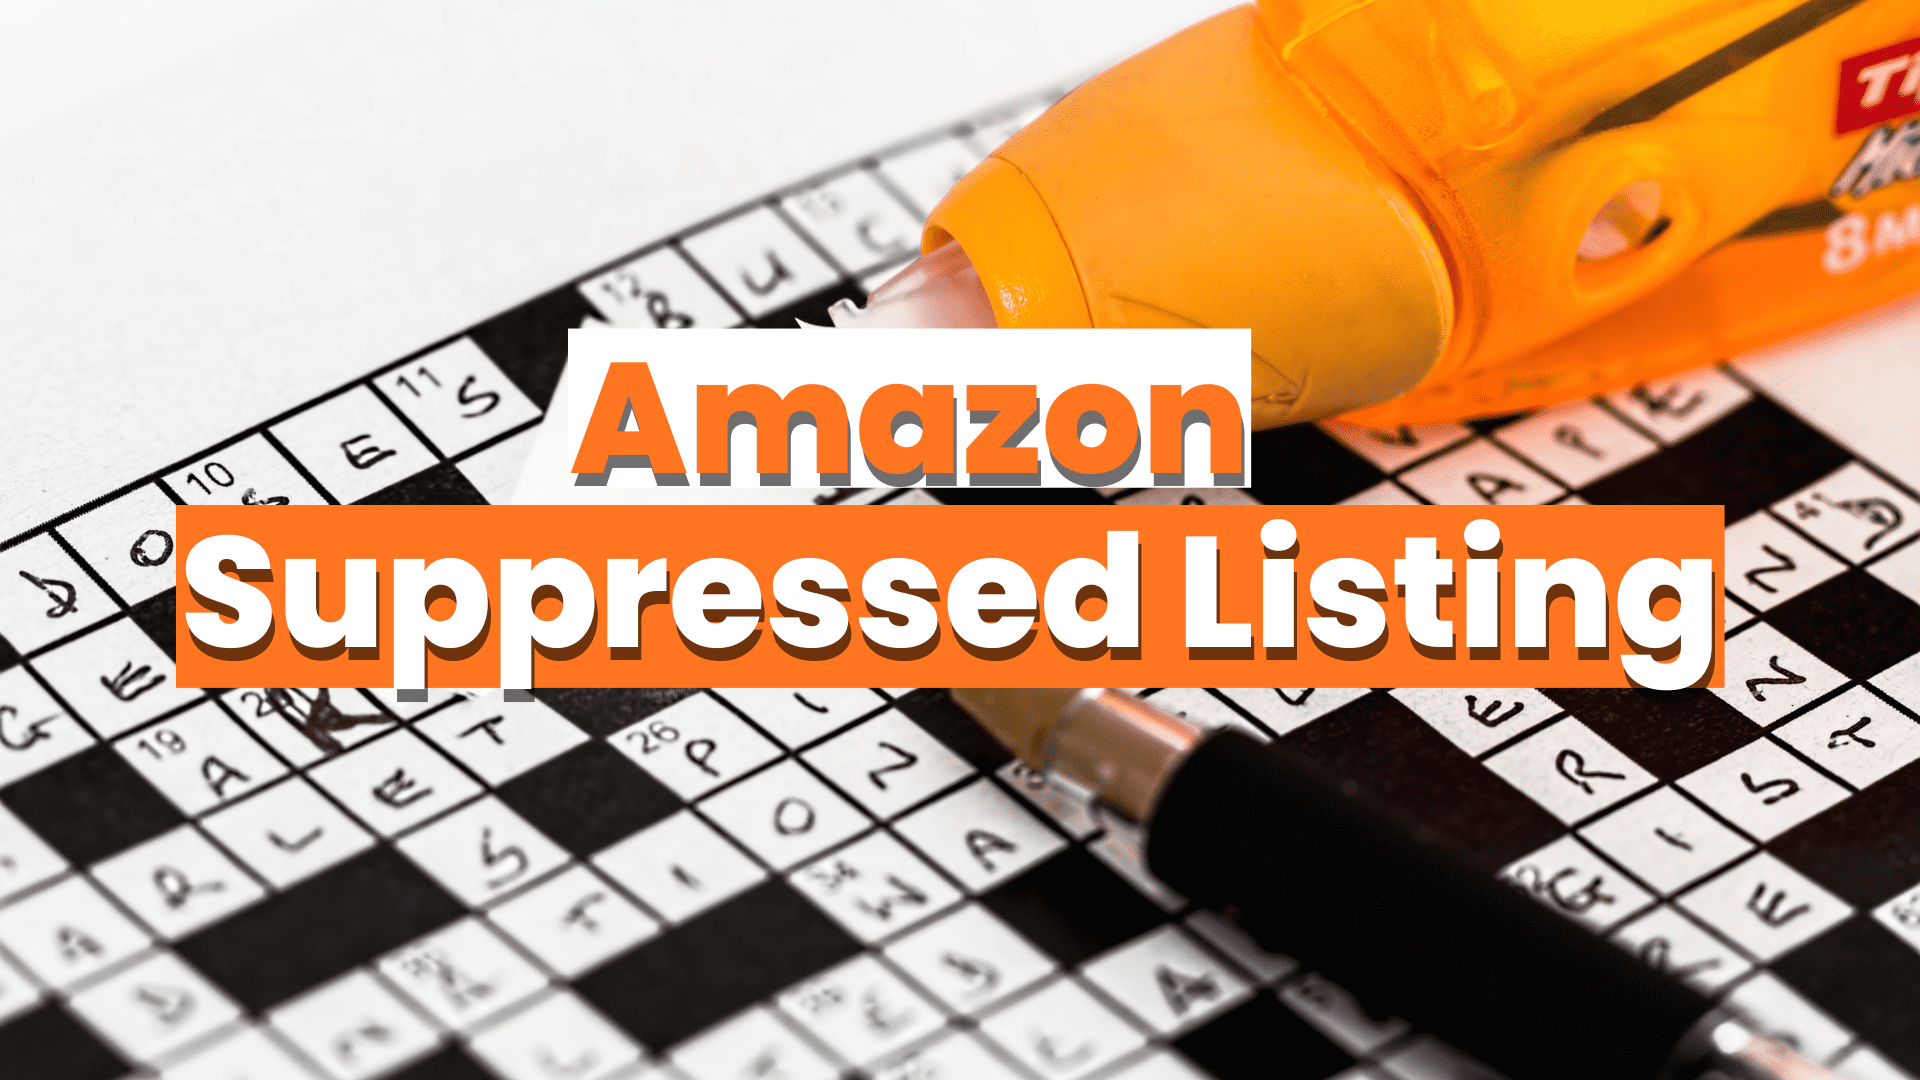 Amazon Suppressed Listing